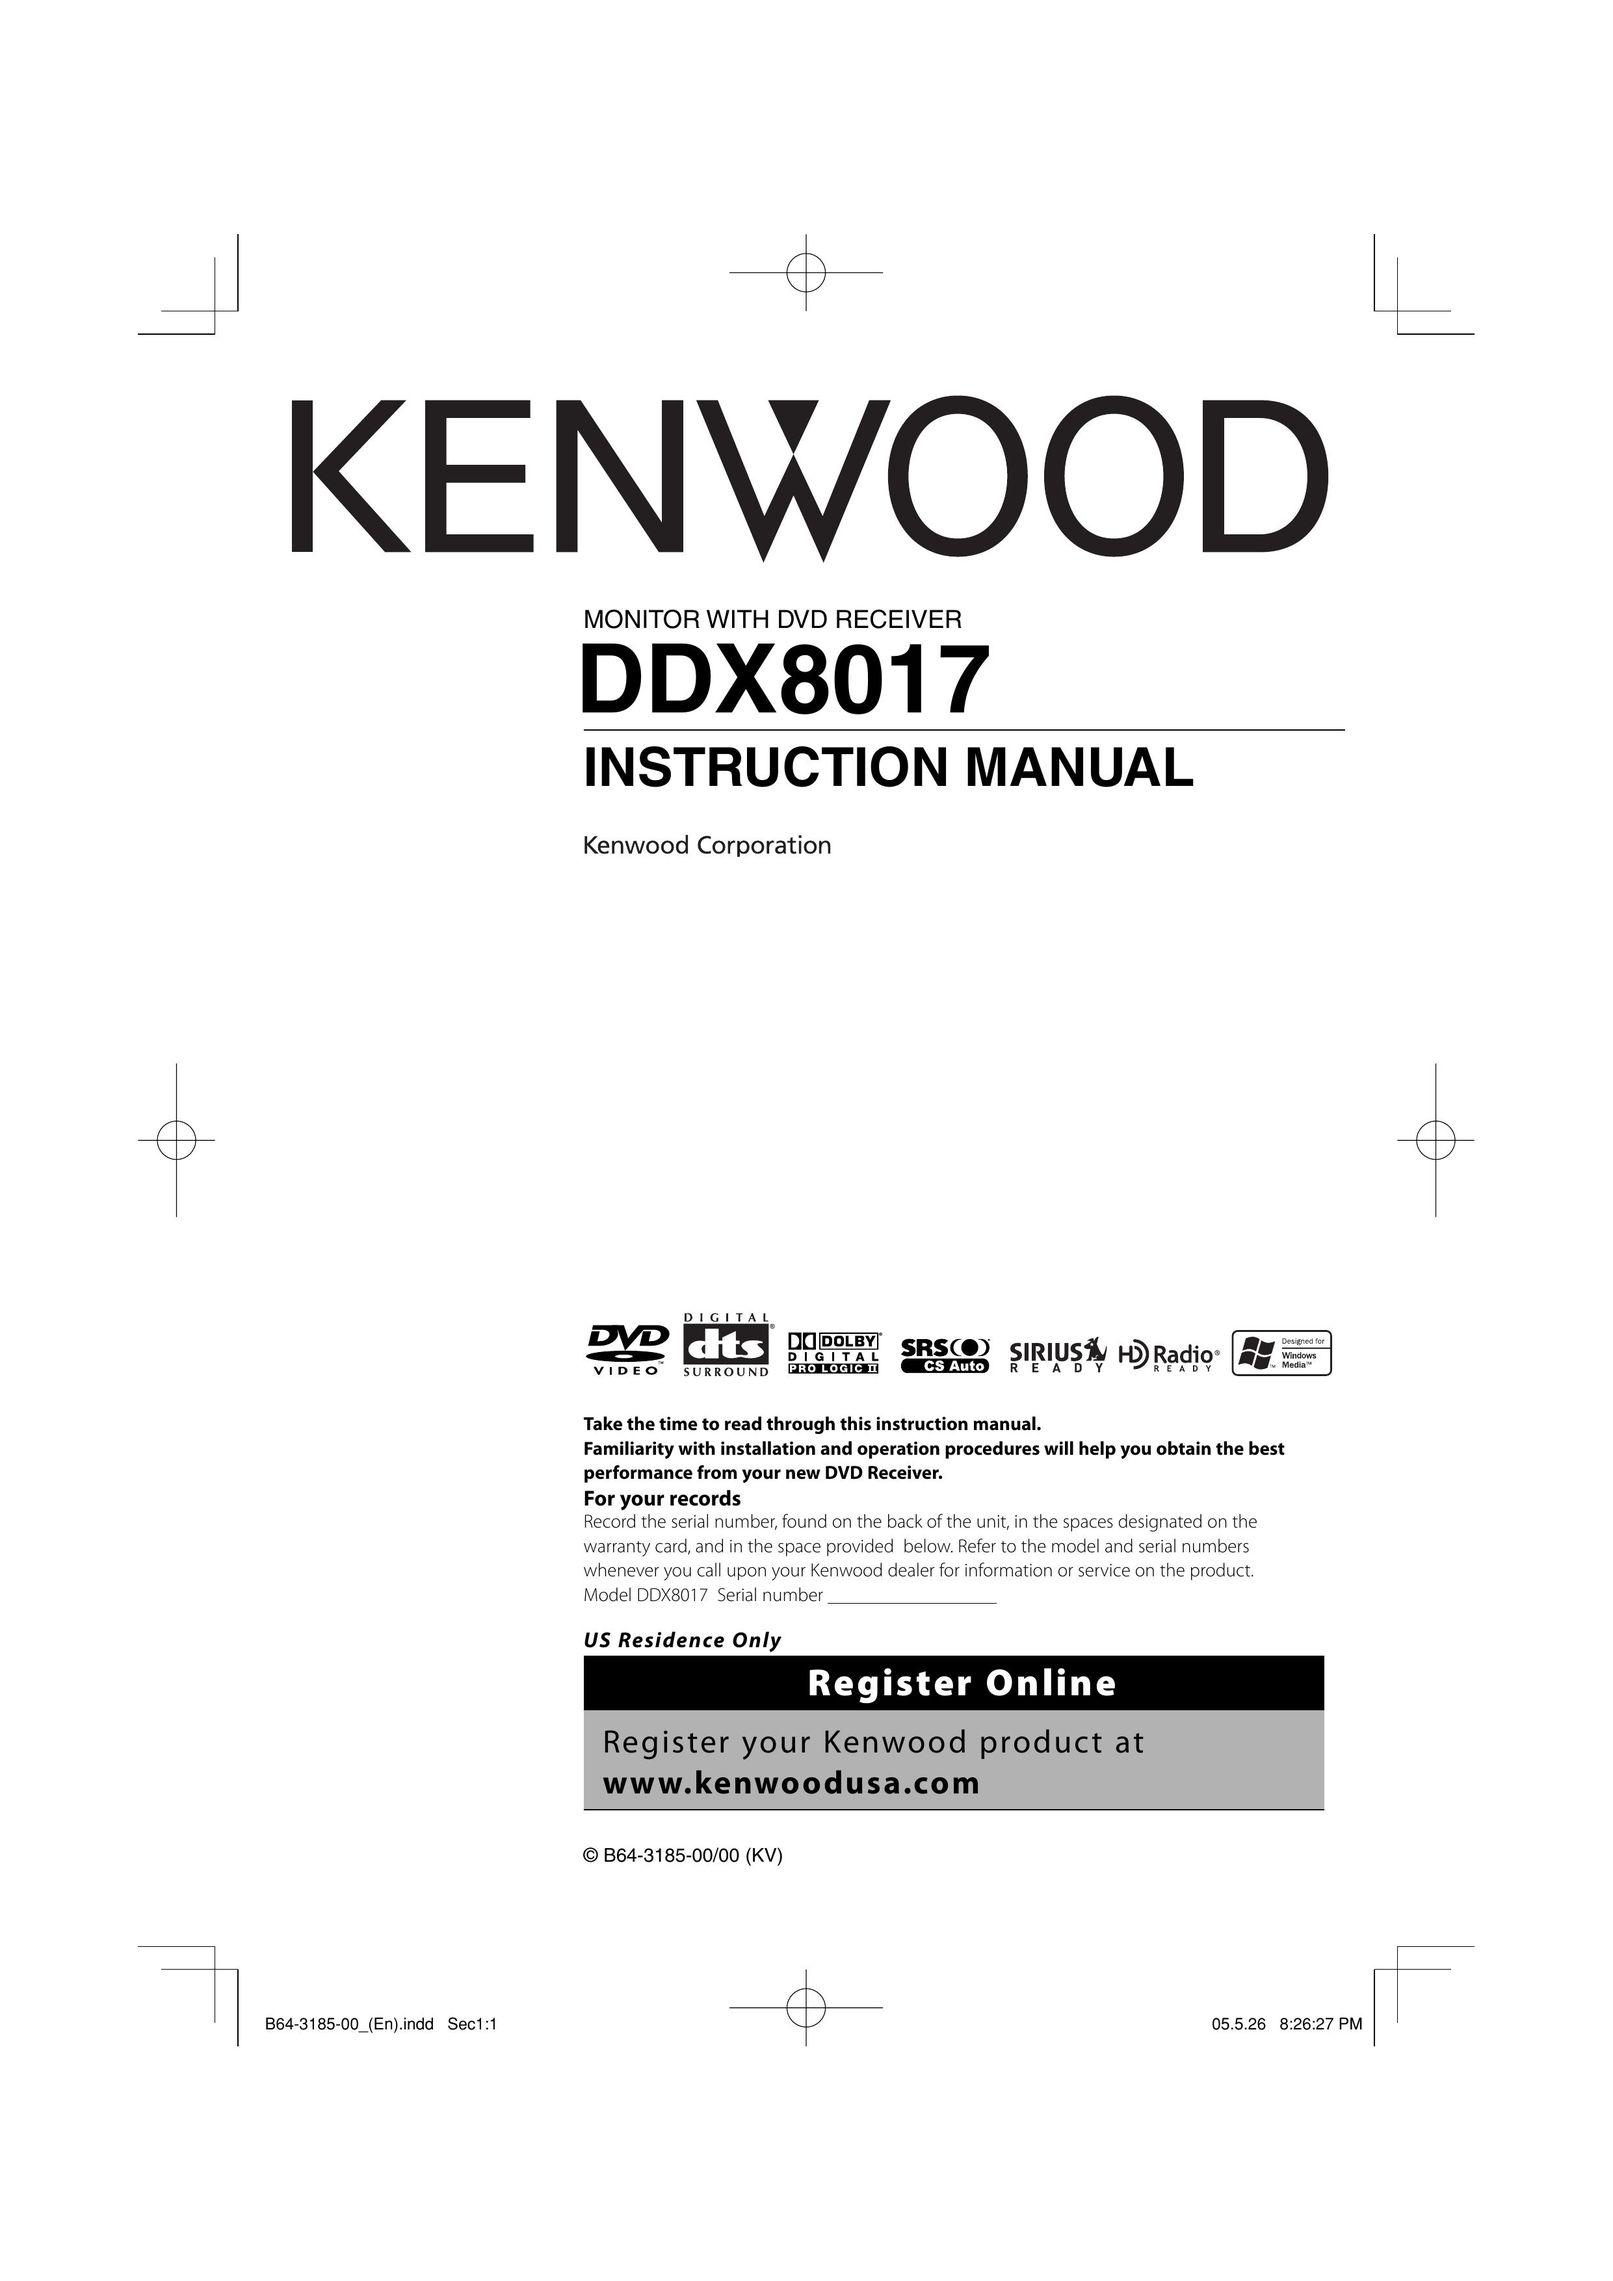 Kenwood DDX8017 Portable DVD Player User Manual